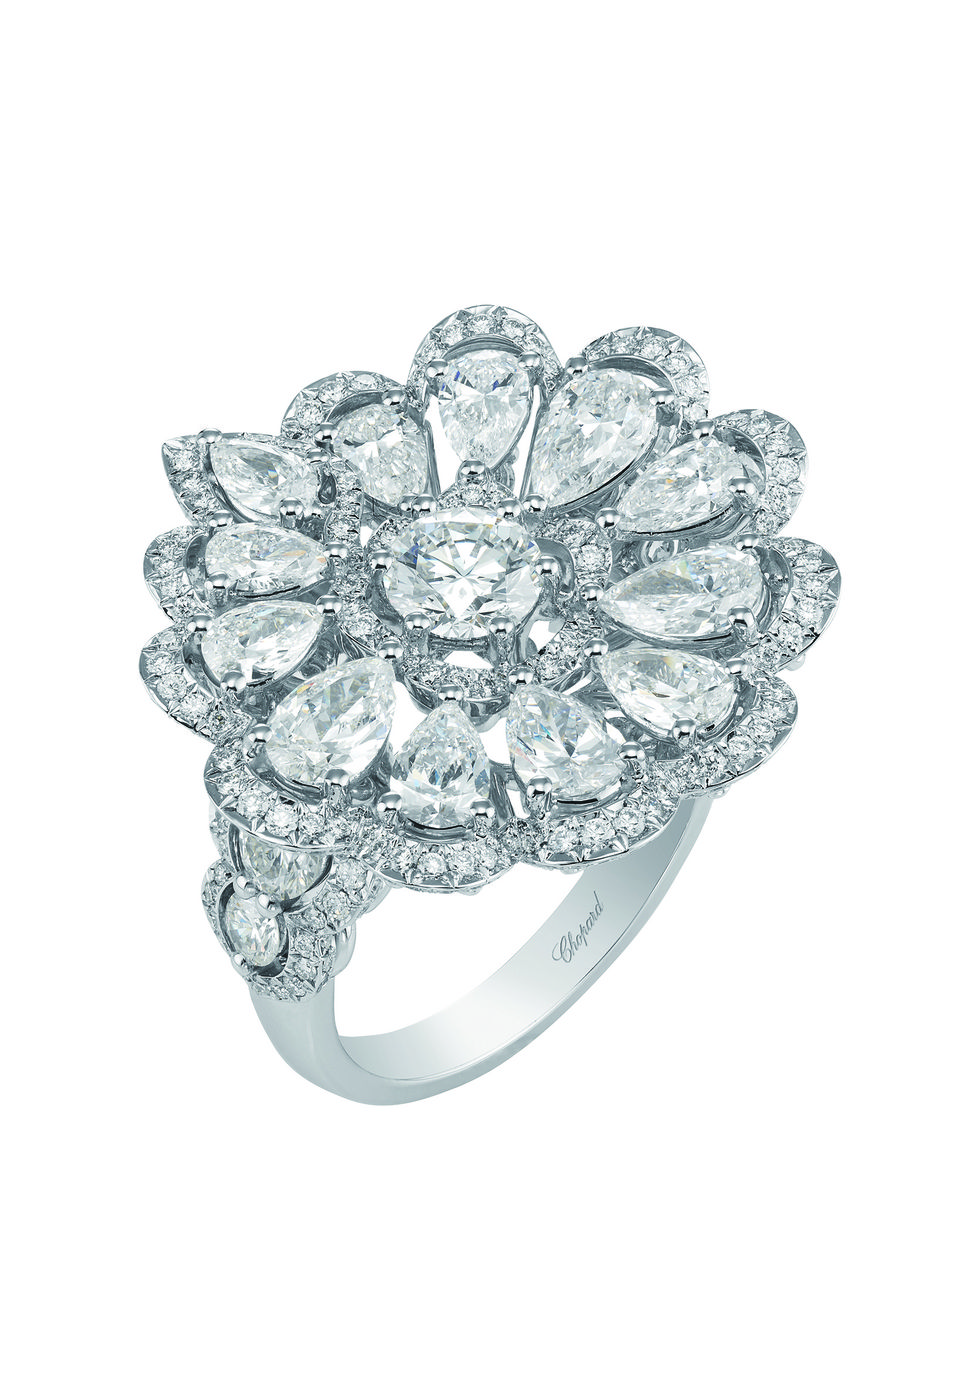 Ring, Diamond, Jewellery, Fashion accessory, Engagement ring, Gemstone, Pre-engagement ring, Platinum, Metal, Silver, 